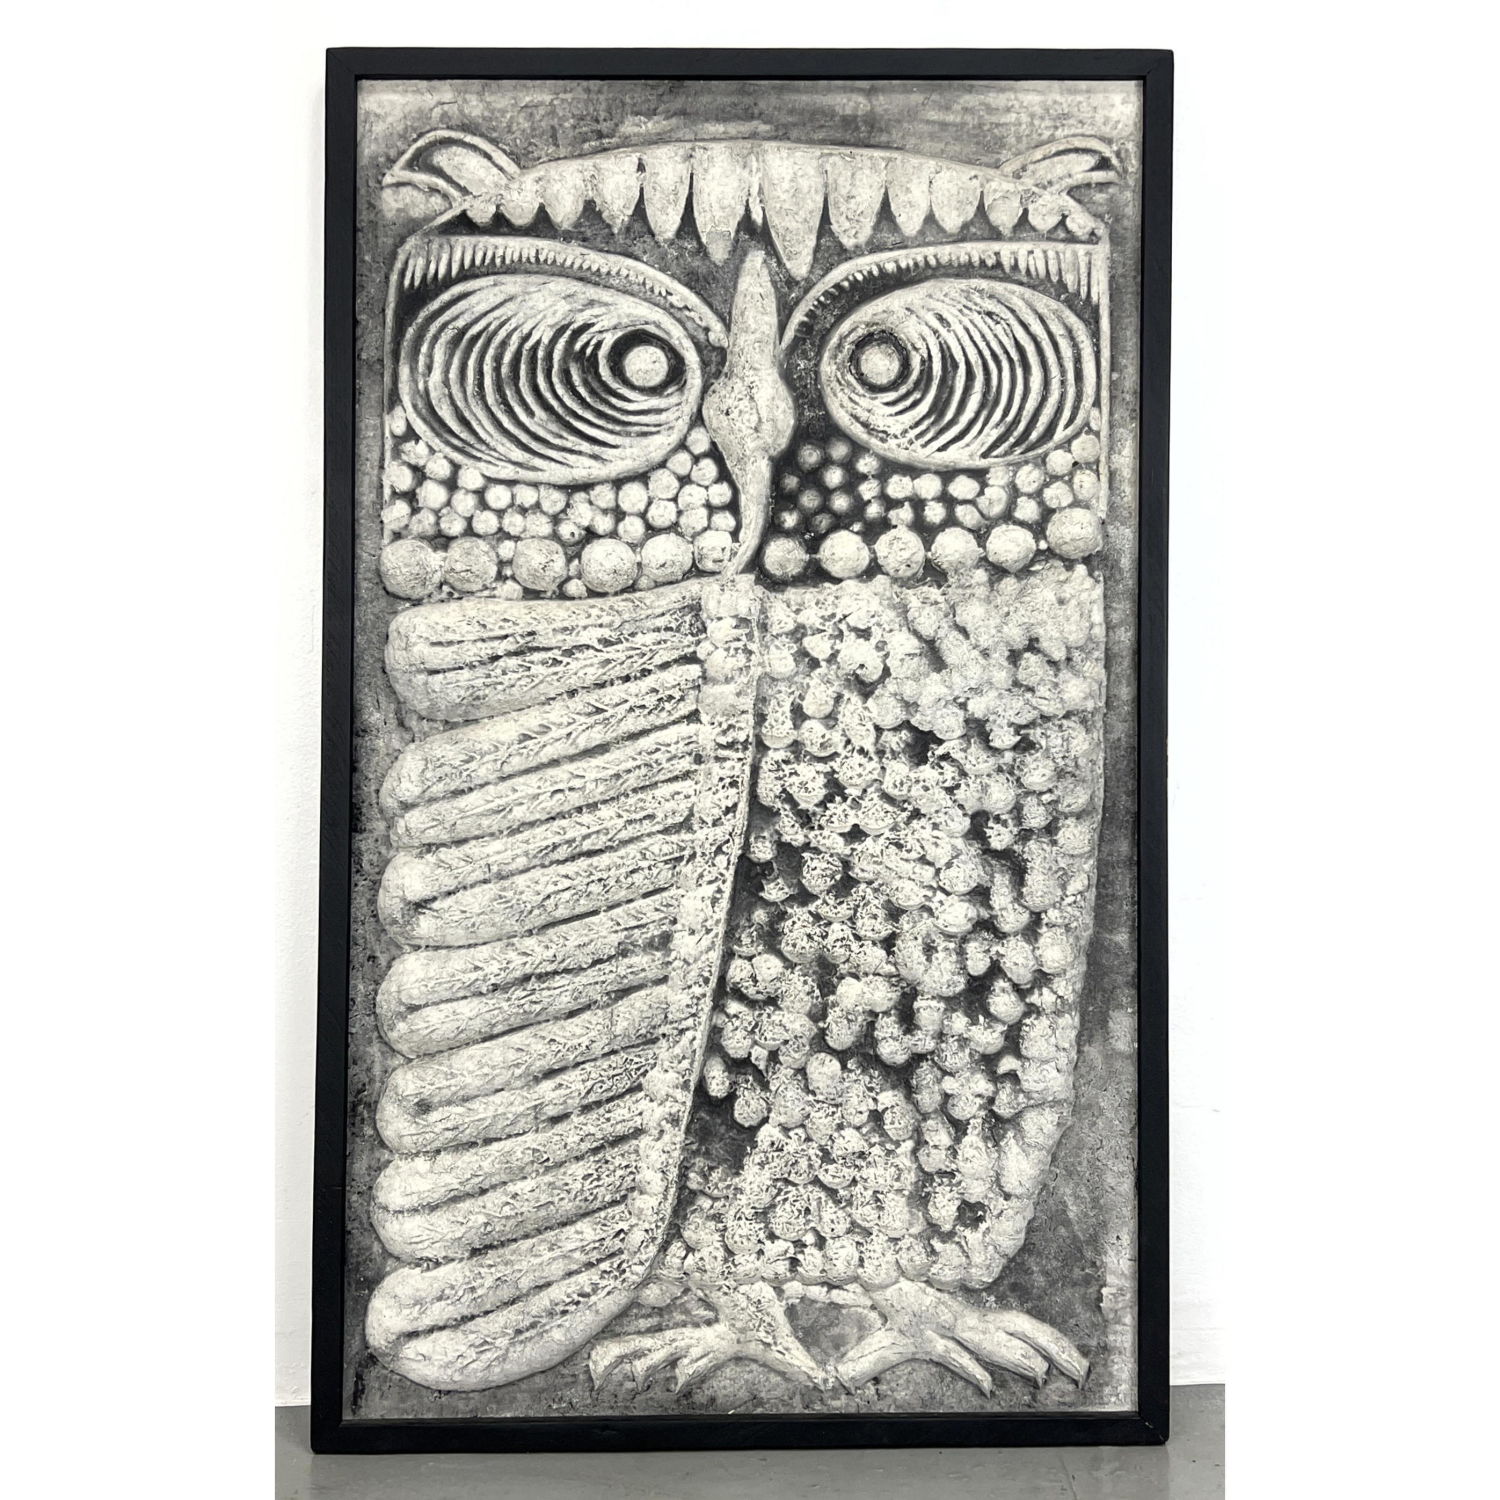 RENDALL Owl Relief Sculptural Panel.